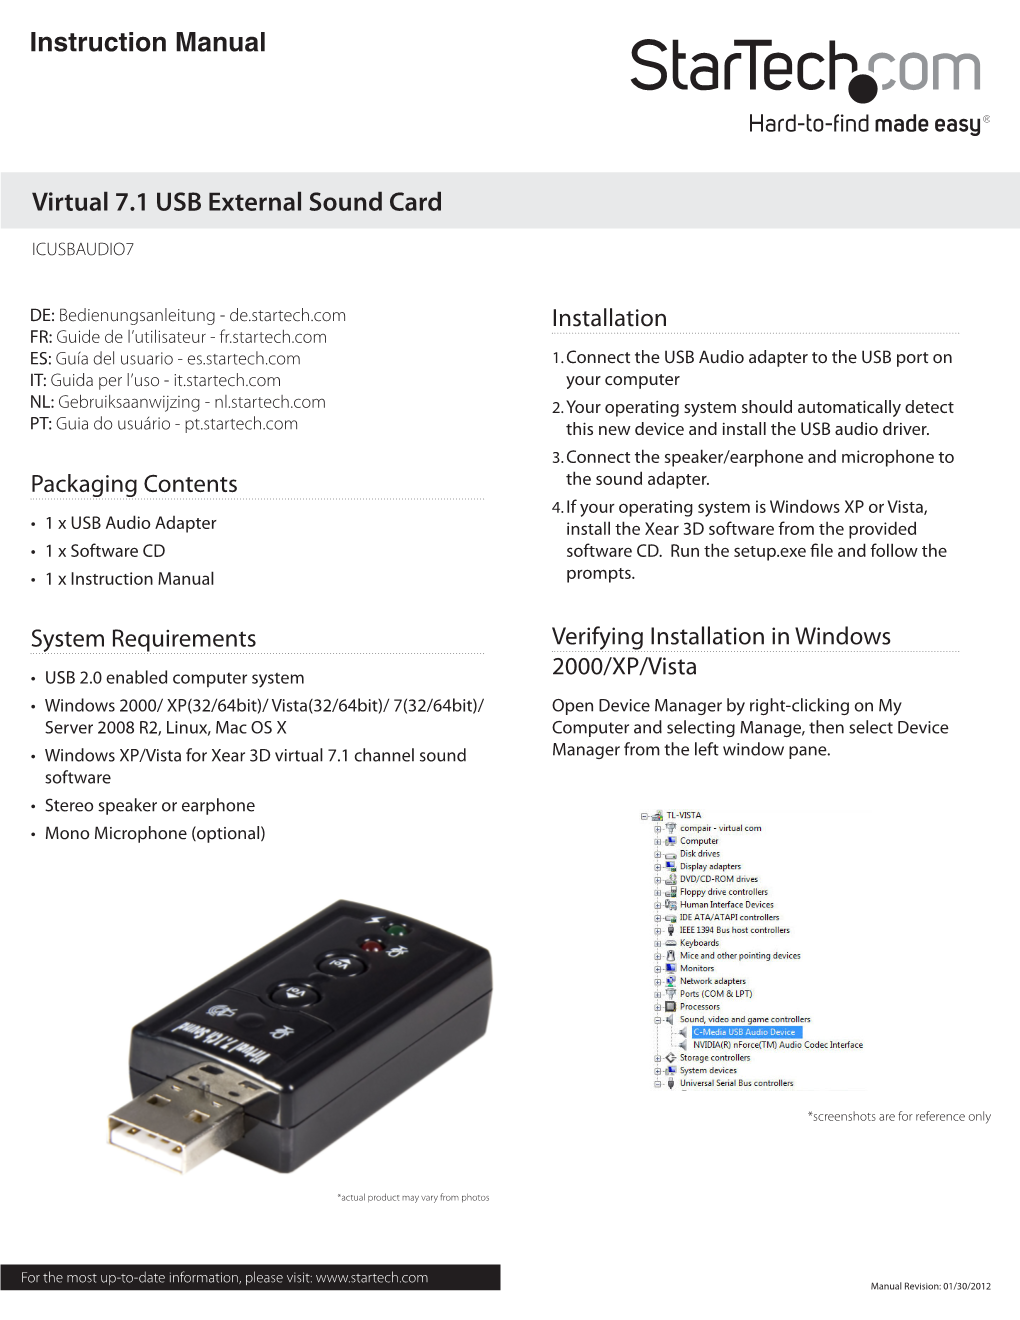 Virtual 7.1 USB External Sound Card Instruction Manual